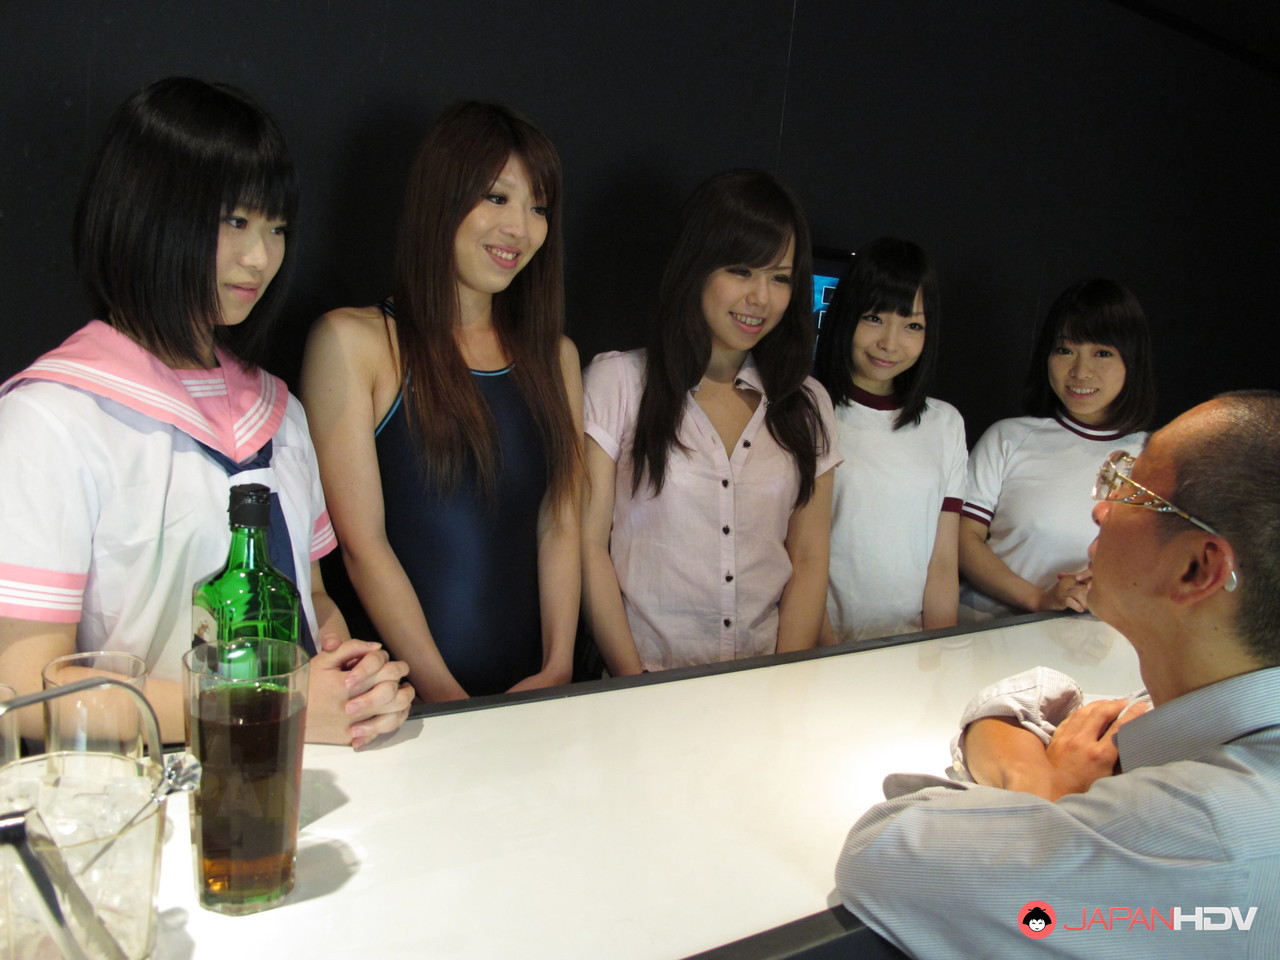 Cute Japanese teens participate in a wild Asian orgy in the nightclub 色情照片 #424451908 | Japan HDV Pics, Mio Kosaki, Seiko Ida, Yuri Sakura, Japanese, 手机色情